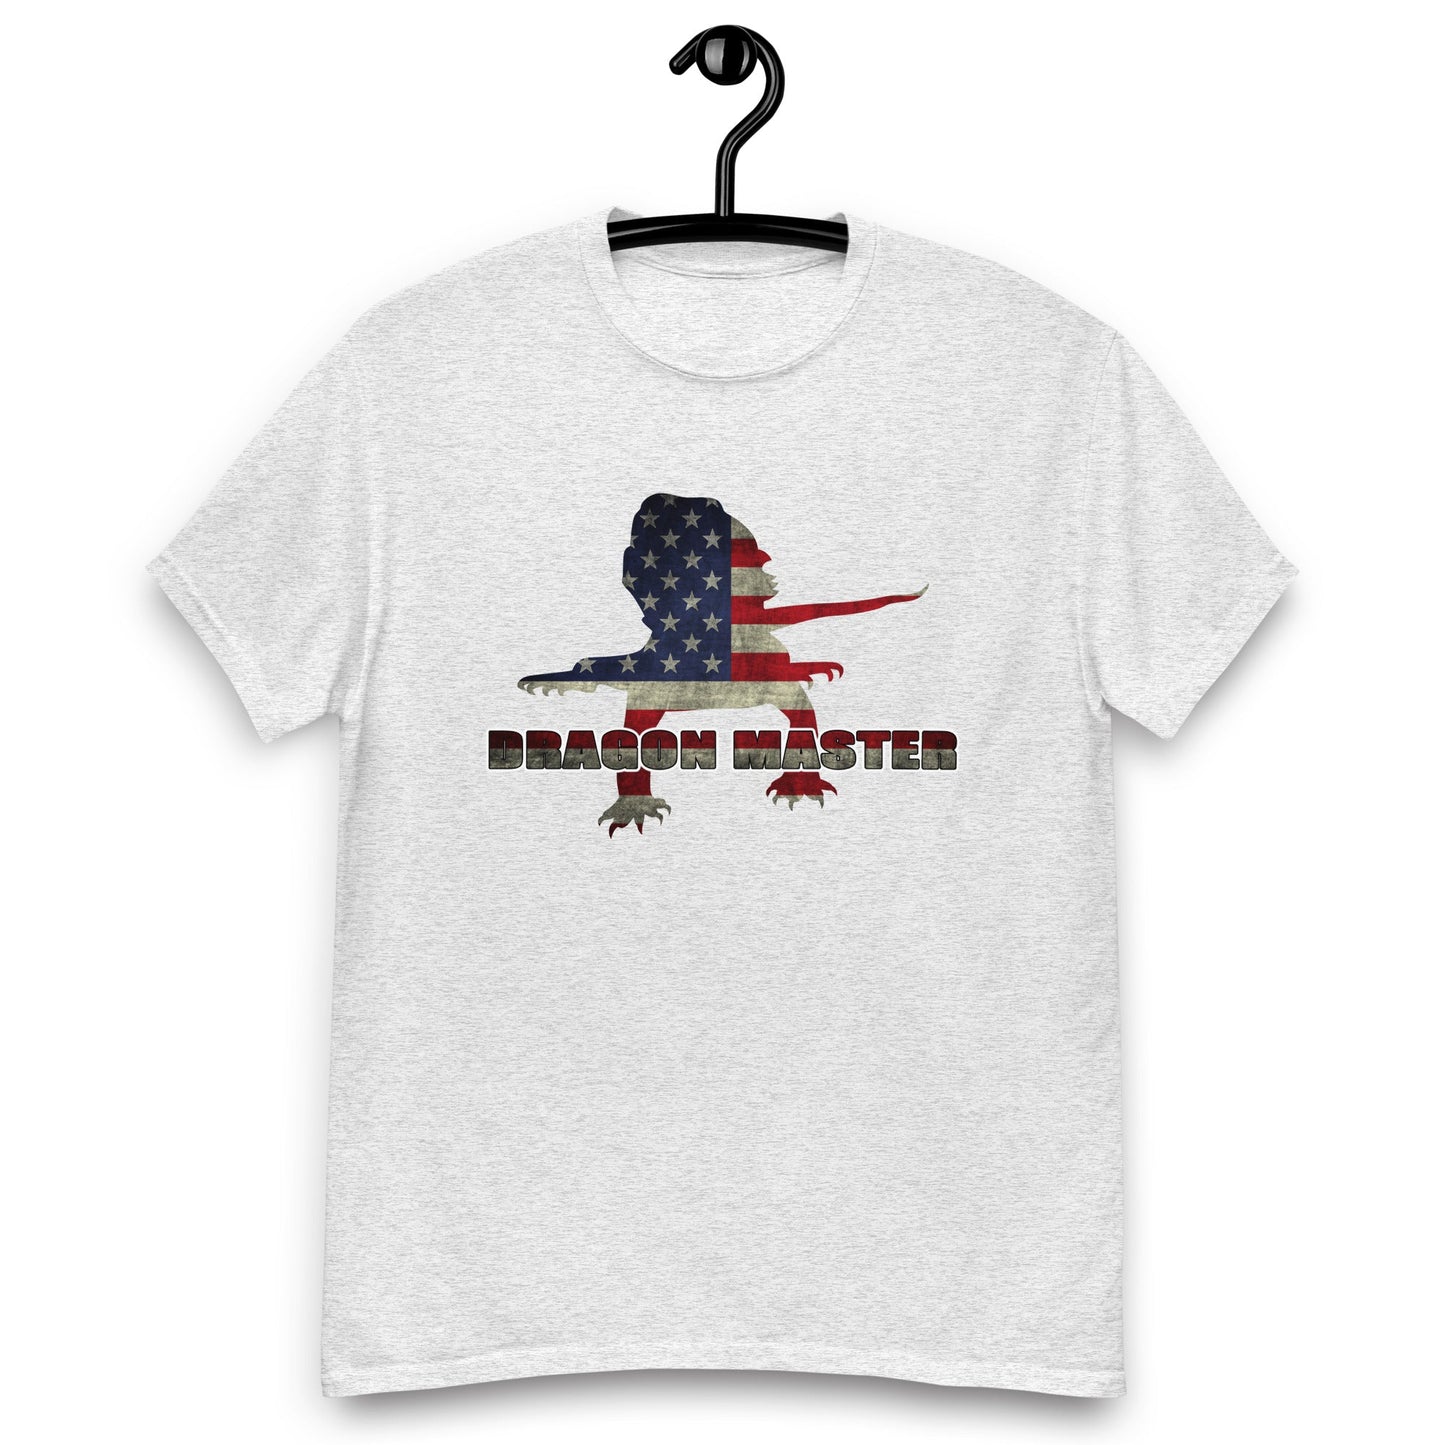 Bearded "Dragon Master" T-Shirt